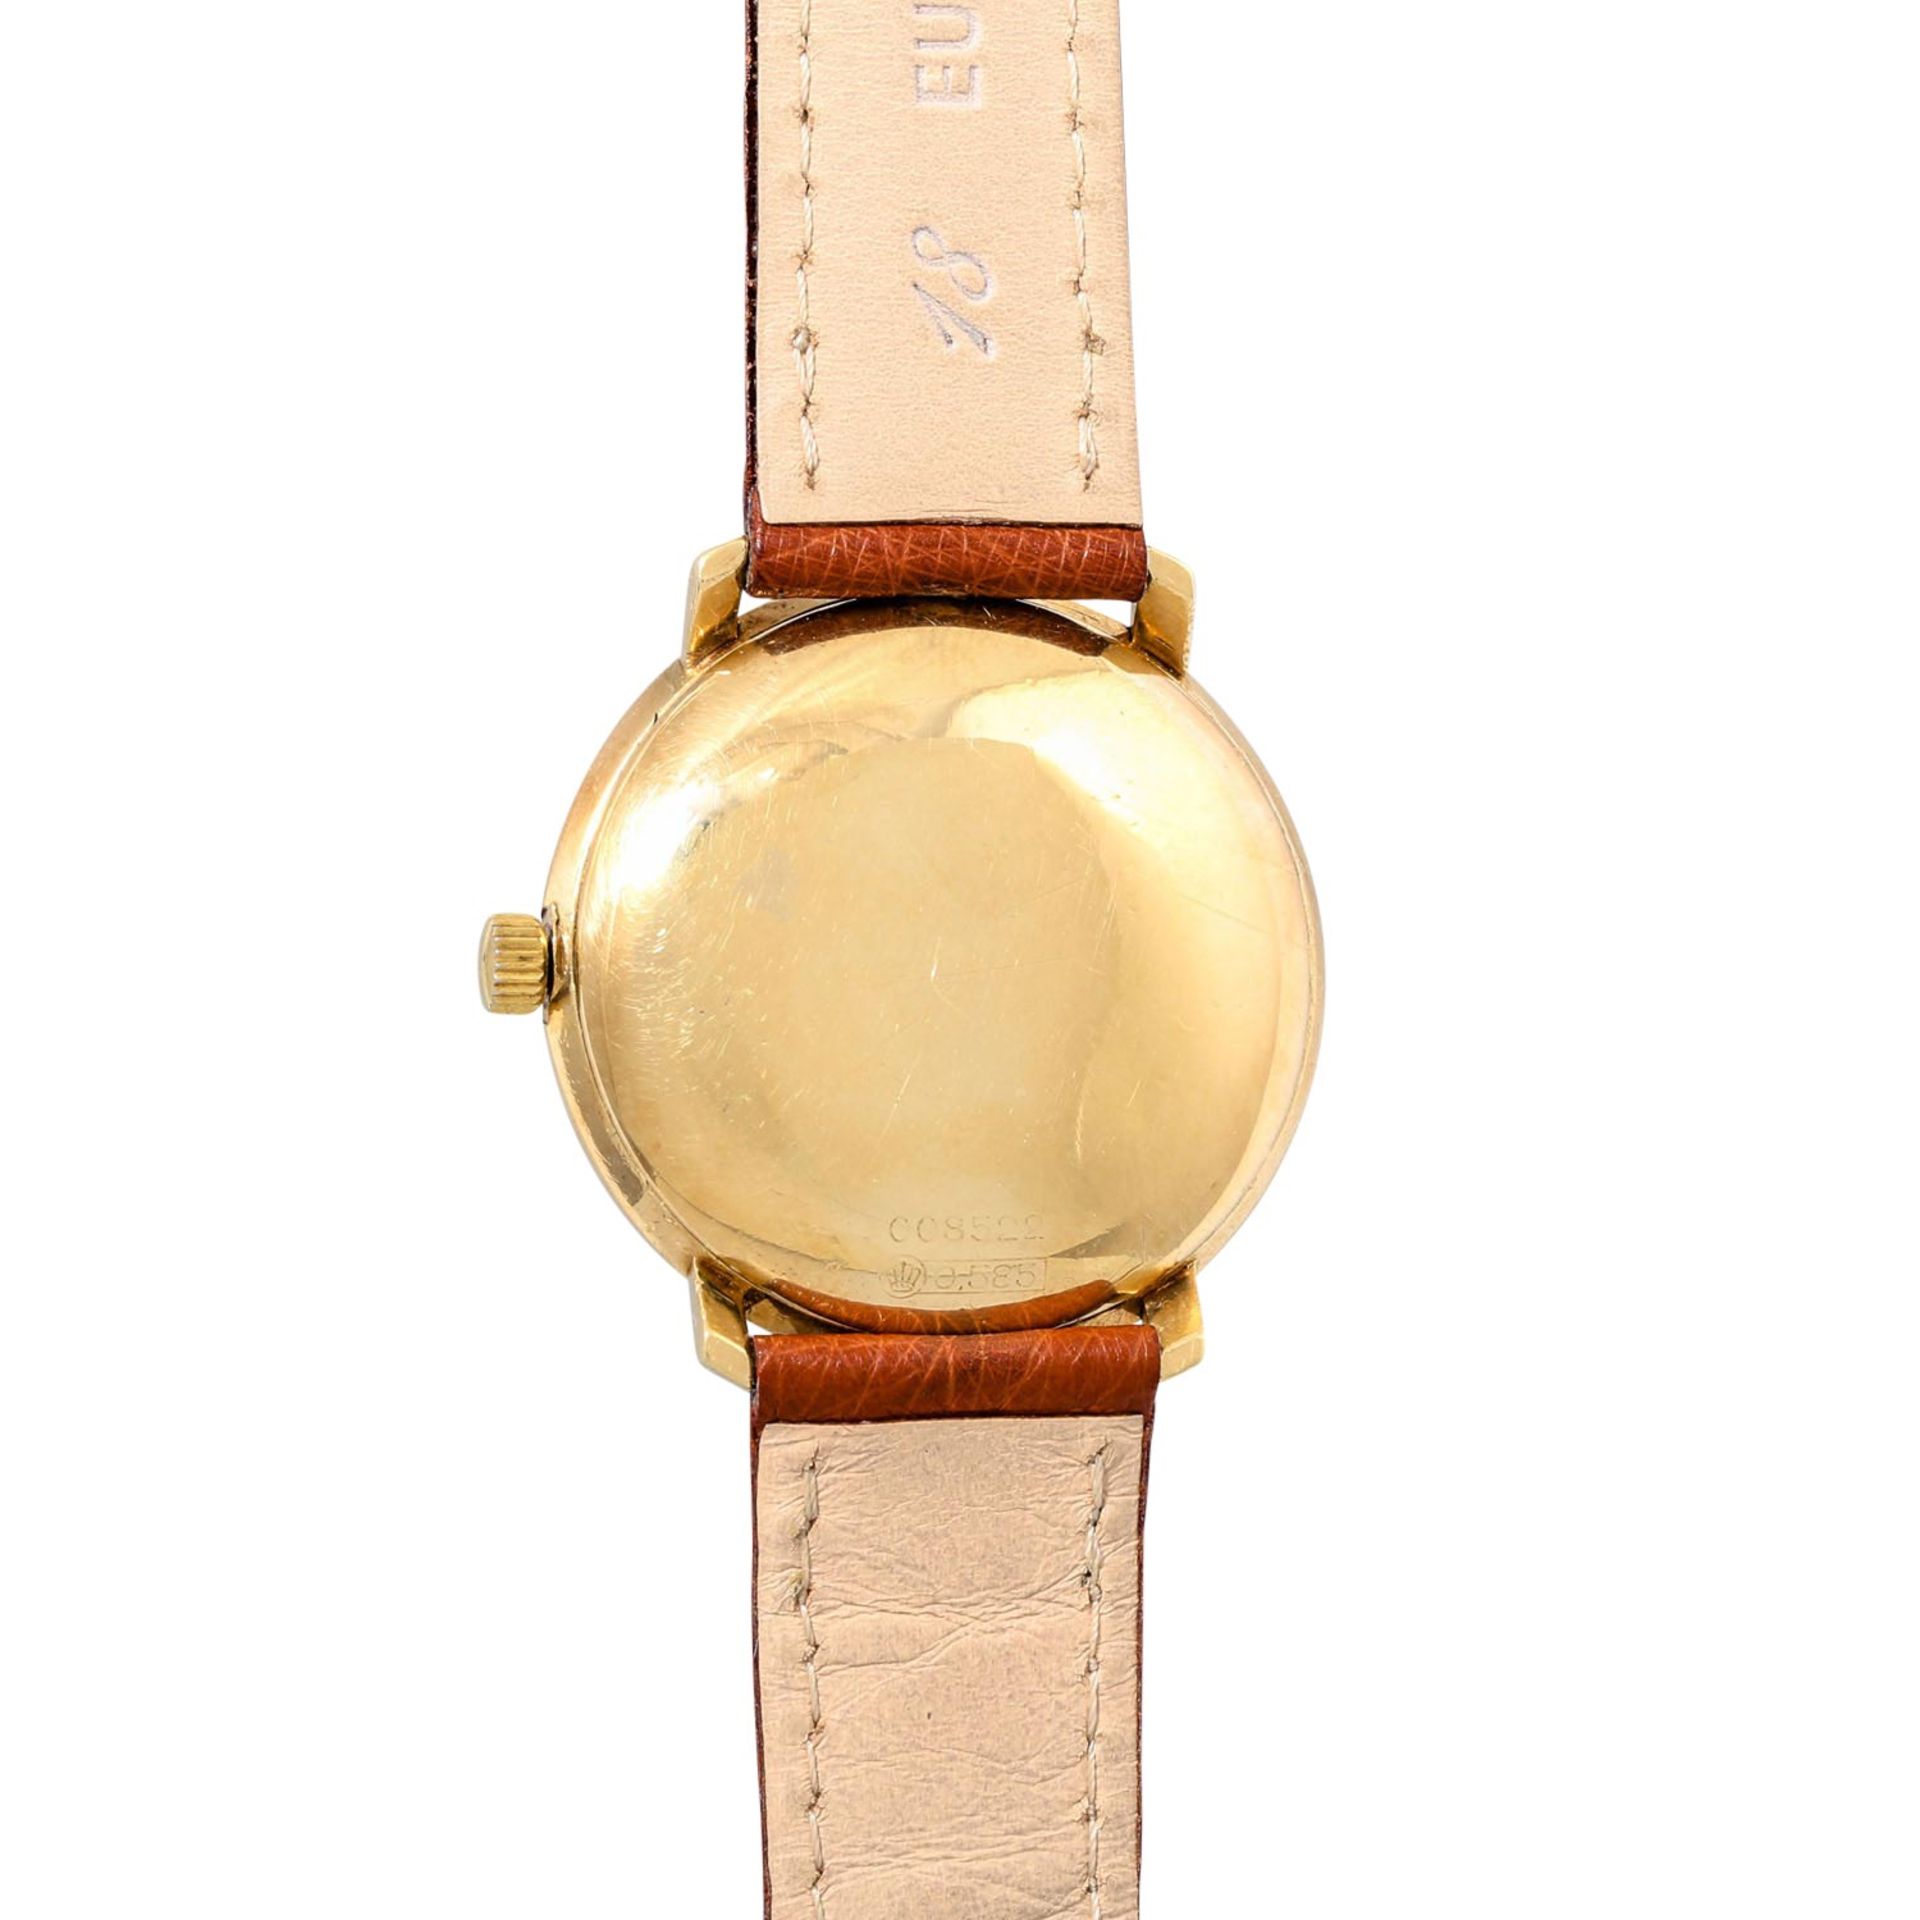 JUNGHANS Vintage Automatic Chronometer Herren Armbanduhr. Ca. 1960er Jahre. - Bild 2 aus 7